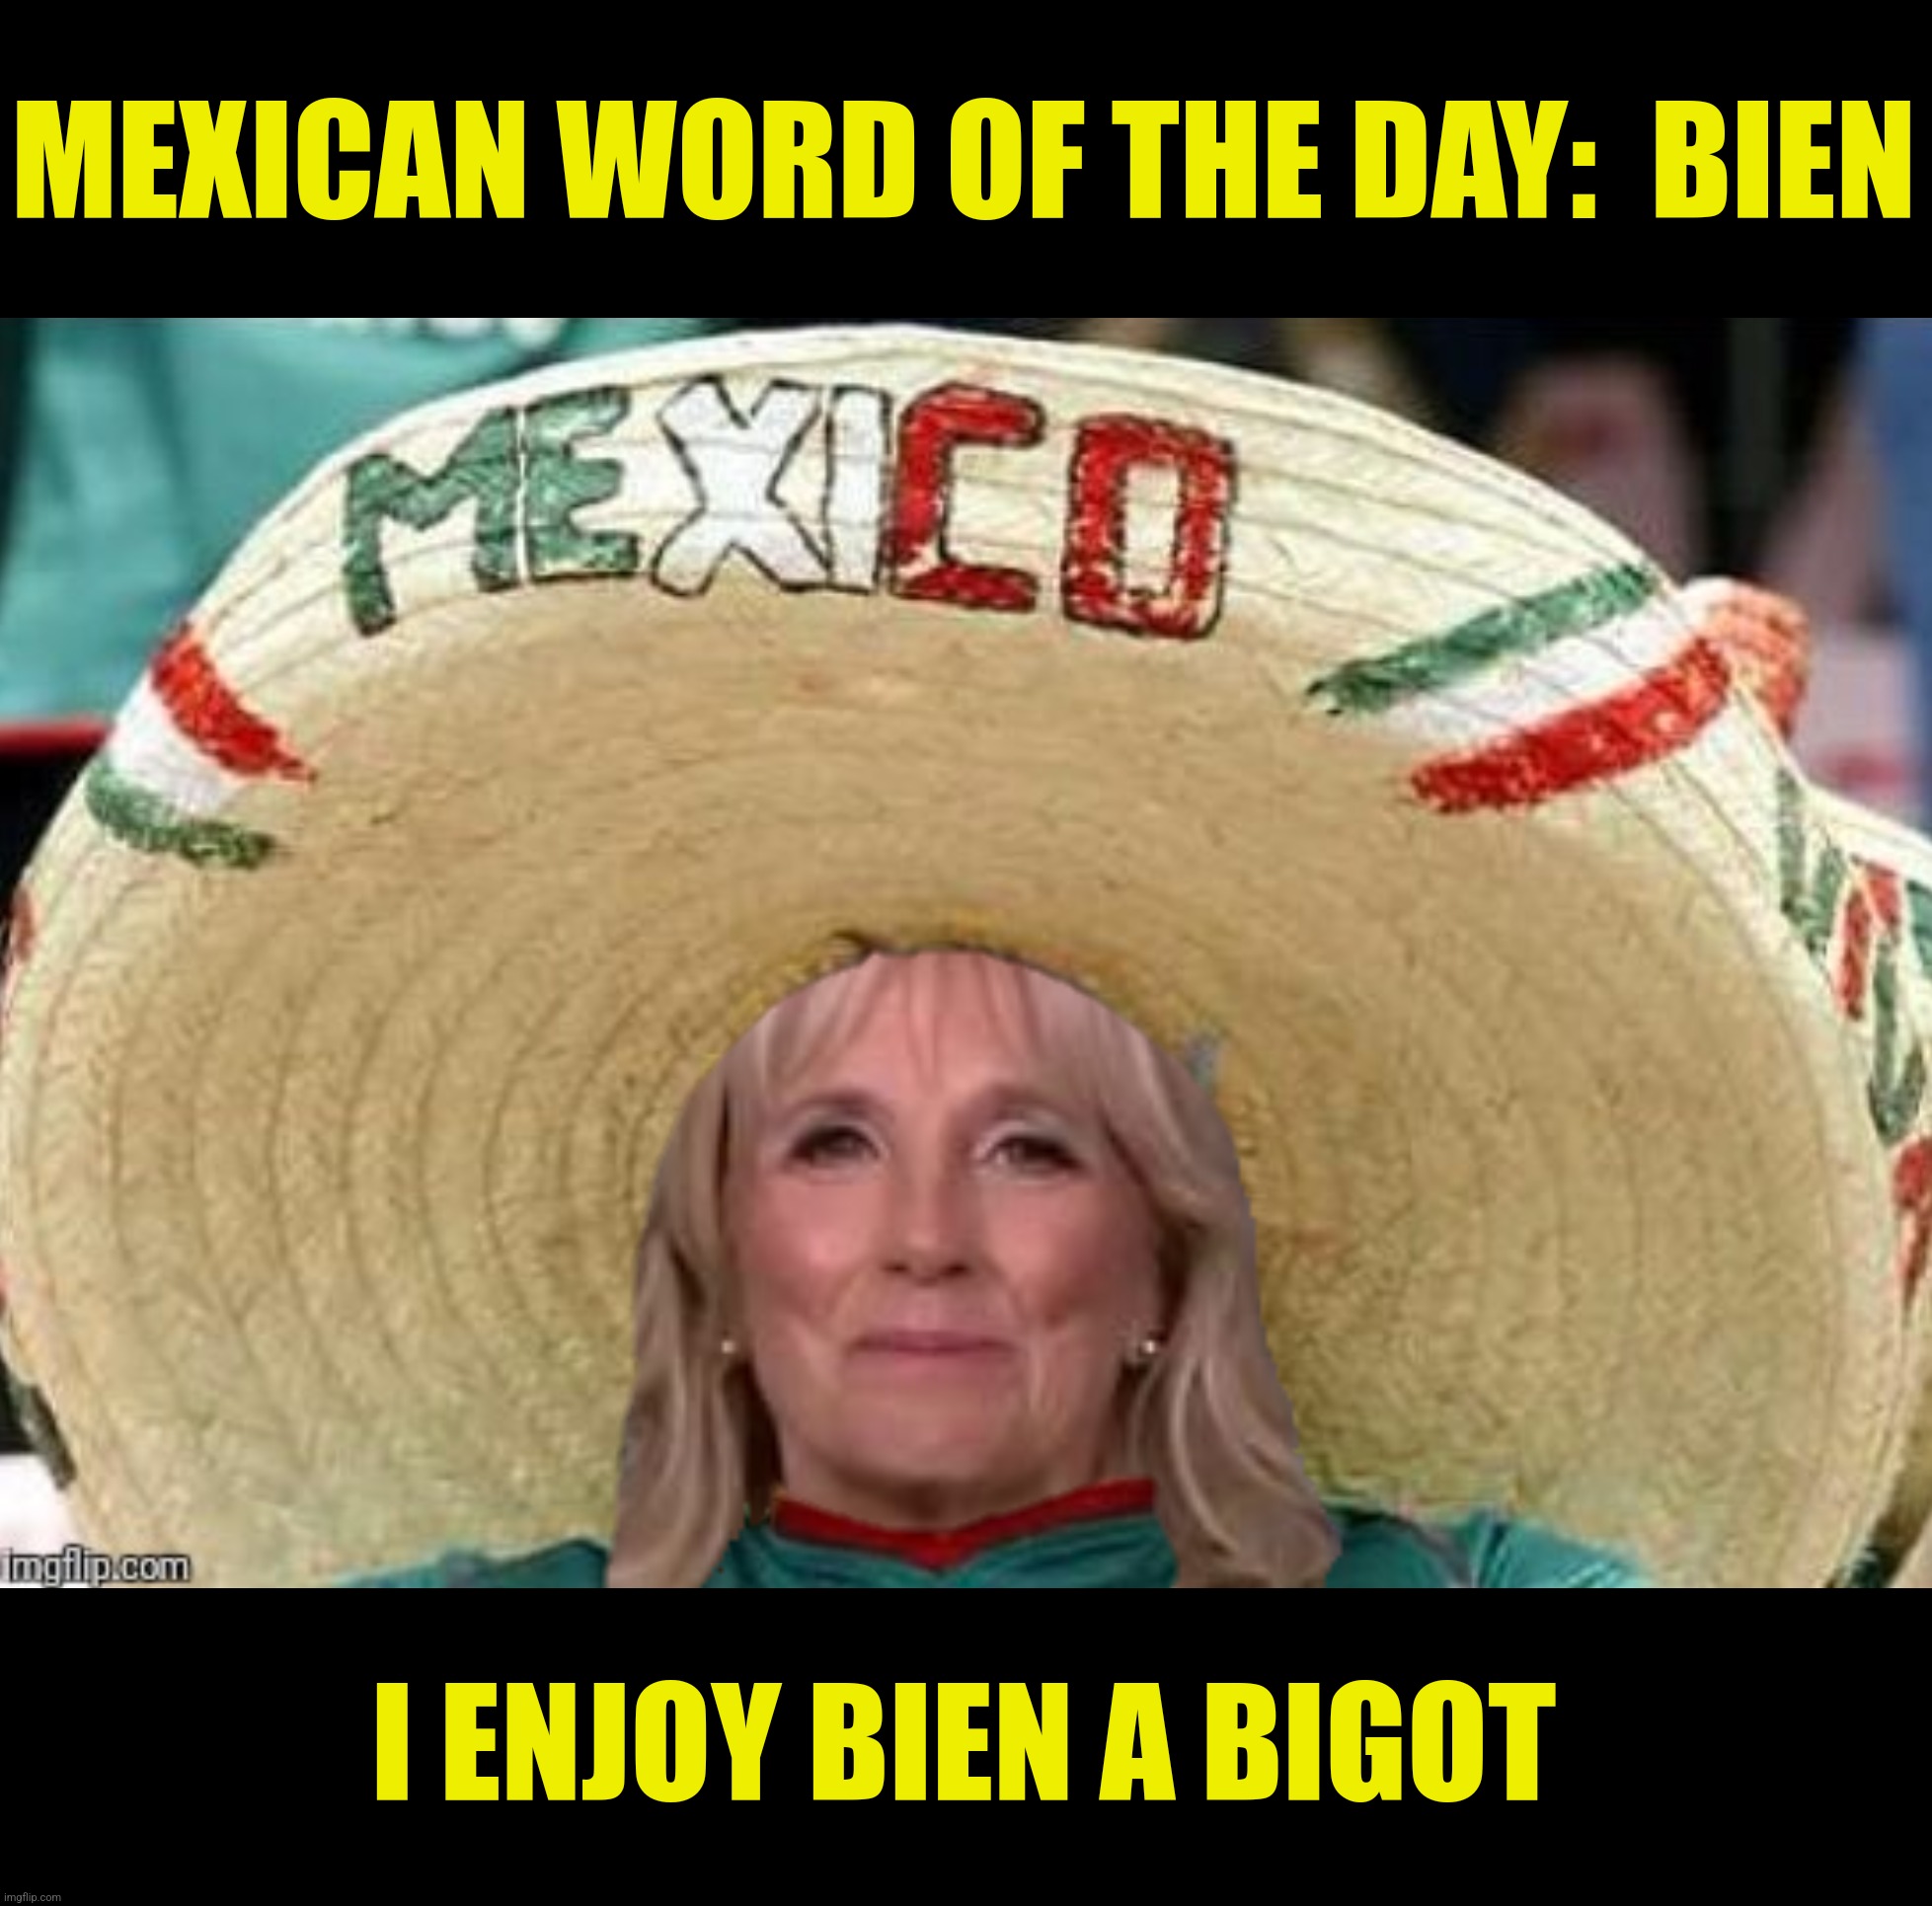 Jill Bidenx | MEXICAN WORD OF THE DAY:  BIEN; I ENJOY BIEN A BIGOT | image tagged in bad photoshop,jill biden,mexican word of the day,bien,bigot | made w/ Imgflip meme maker